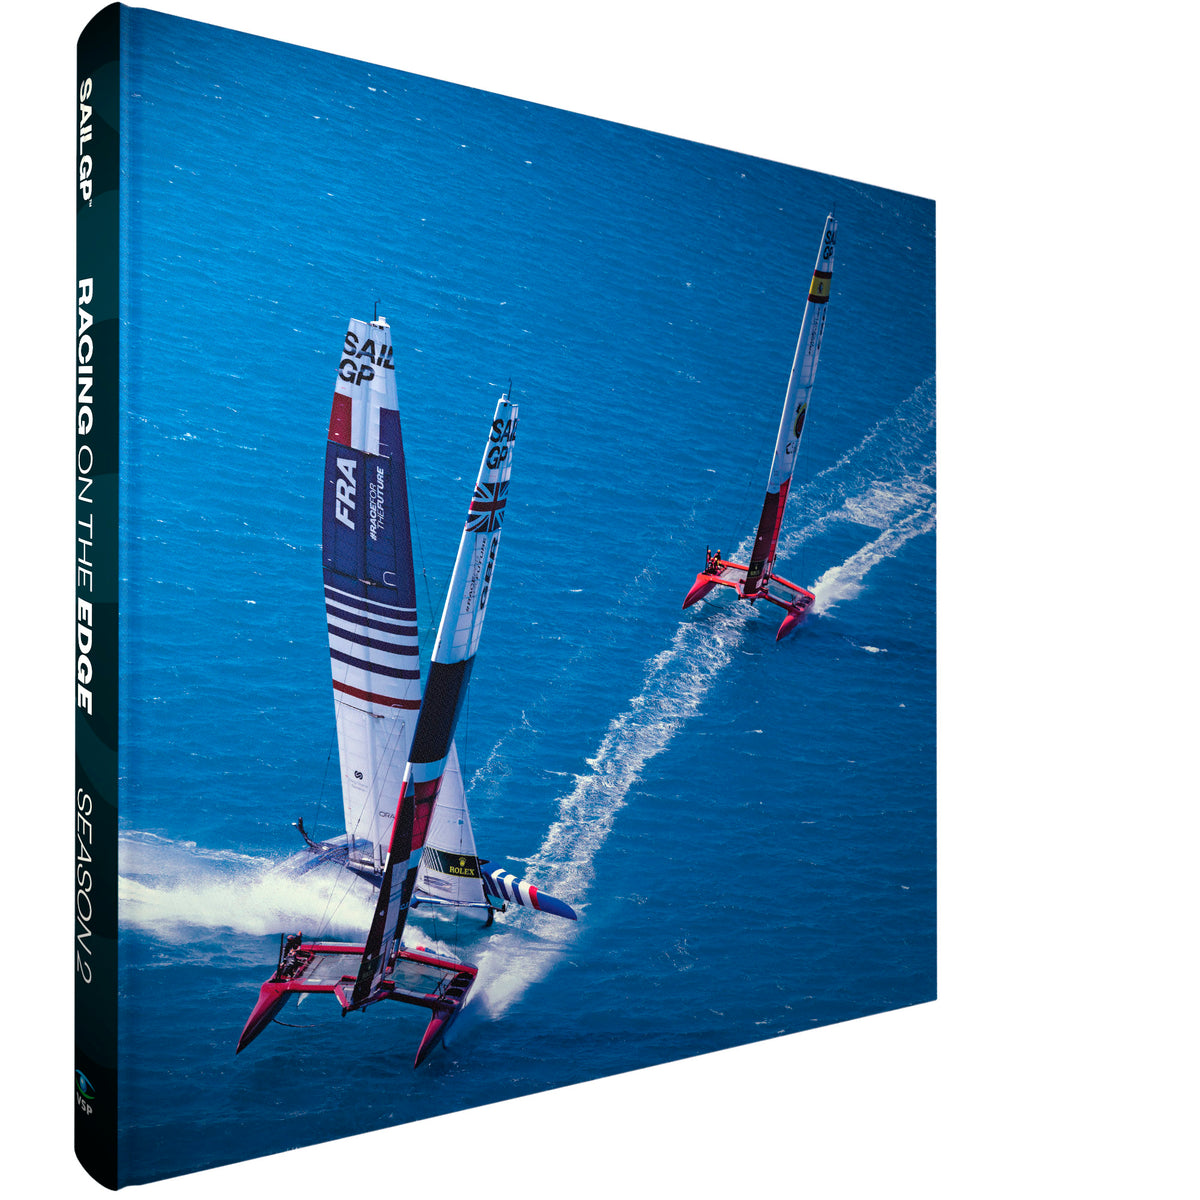 SailGP Racing on the Edge Book